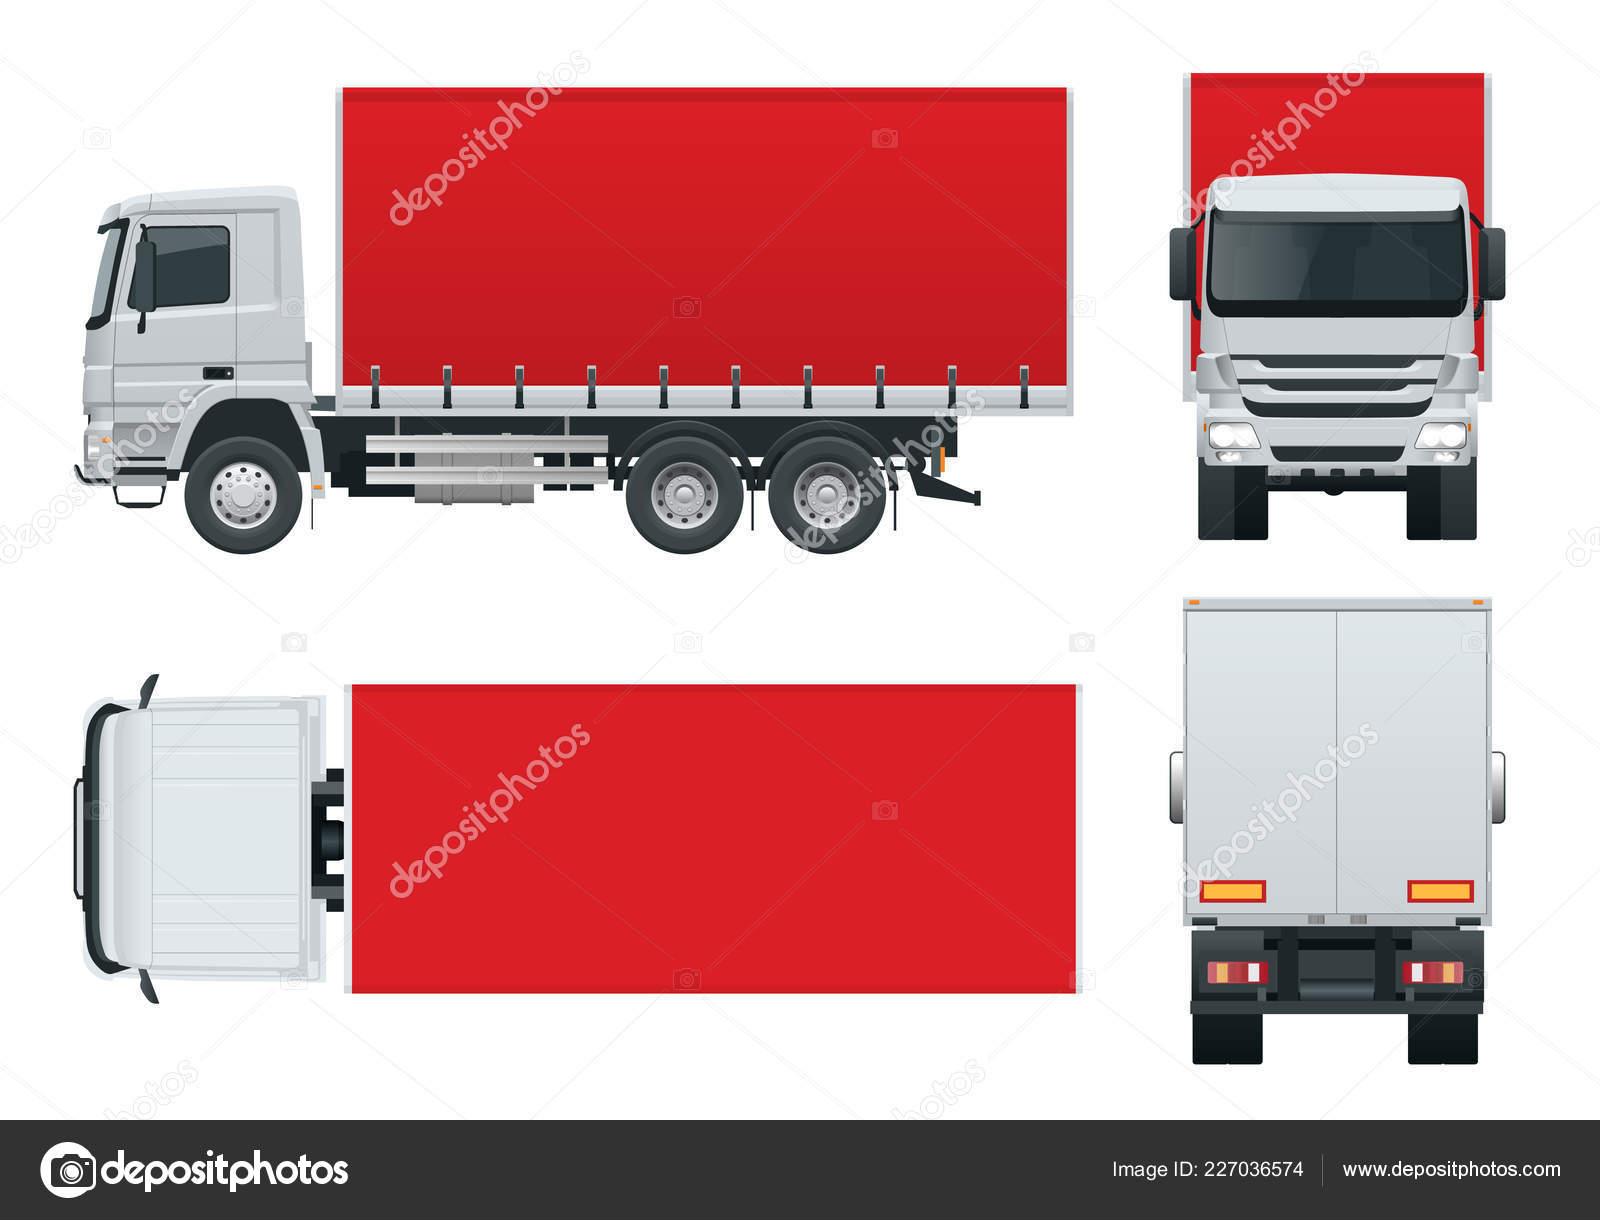 https://st4.depositphotos.com/4230659/22703/v/1600/depositphotos_227036574-stock-illustration-truck-delivery-lorry-mock-up.jpg